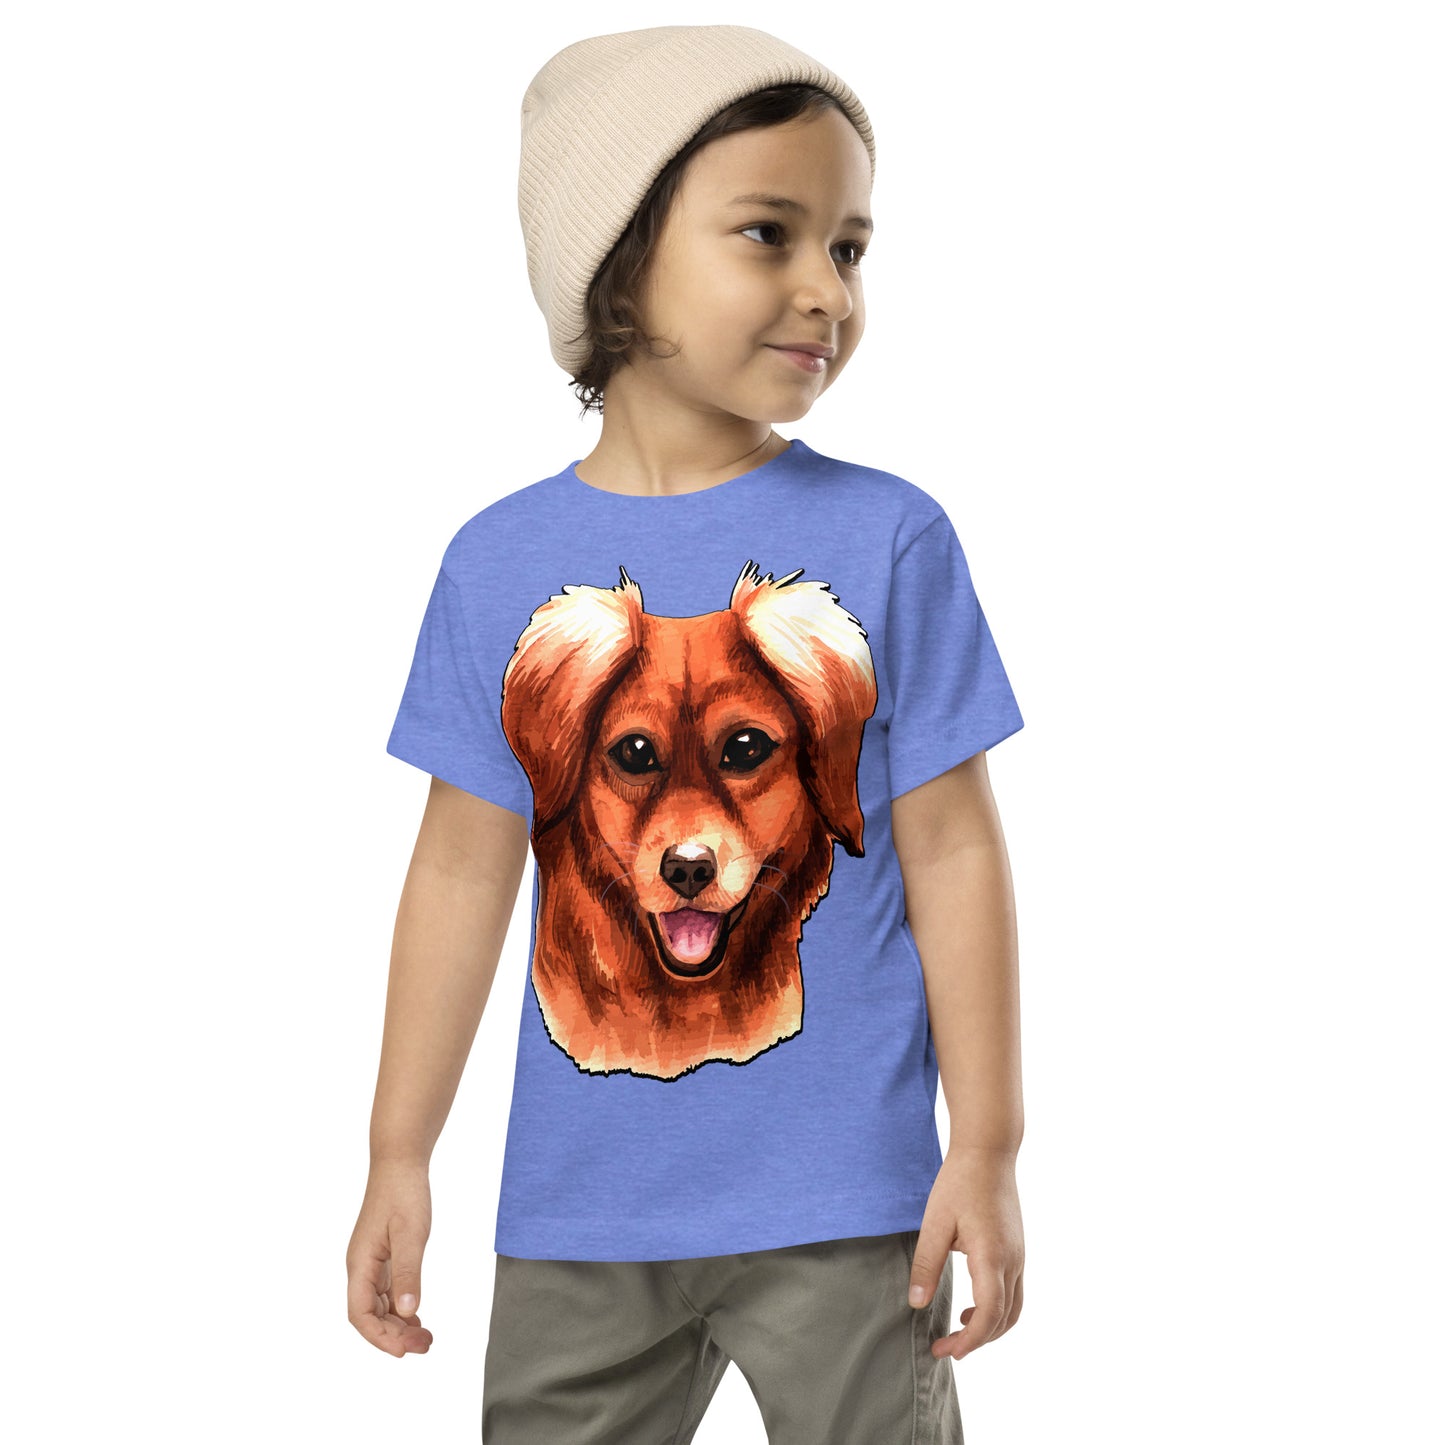 Cool Dog Portrait T-shirt, No. 0576